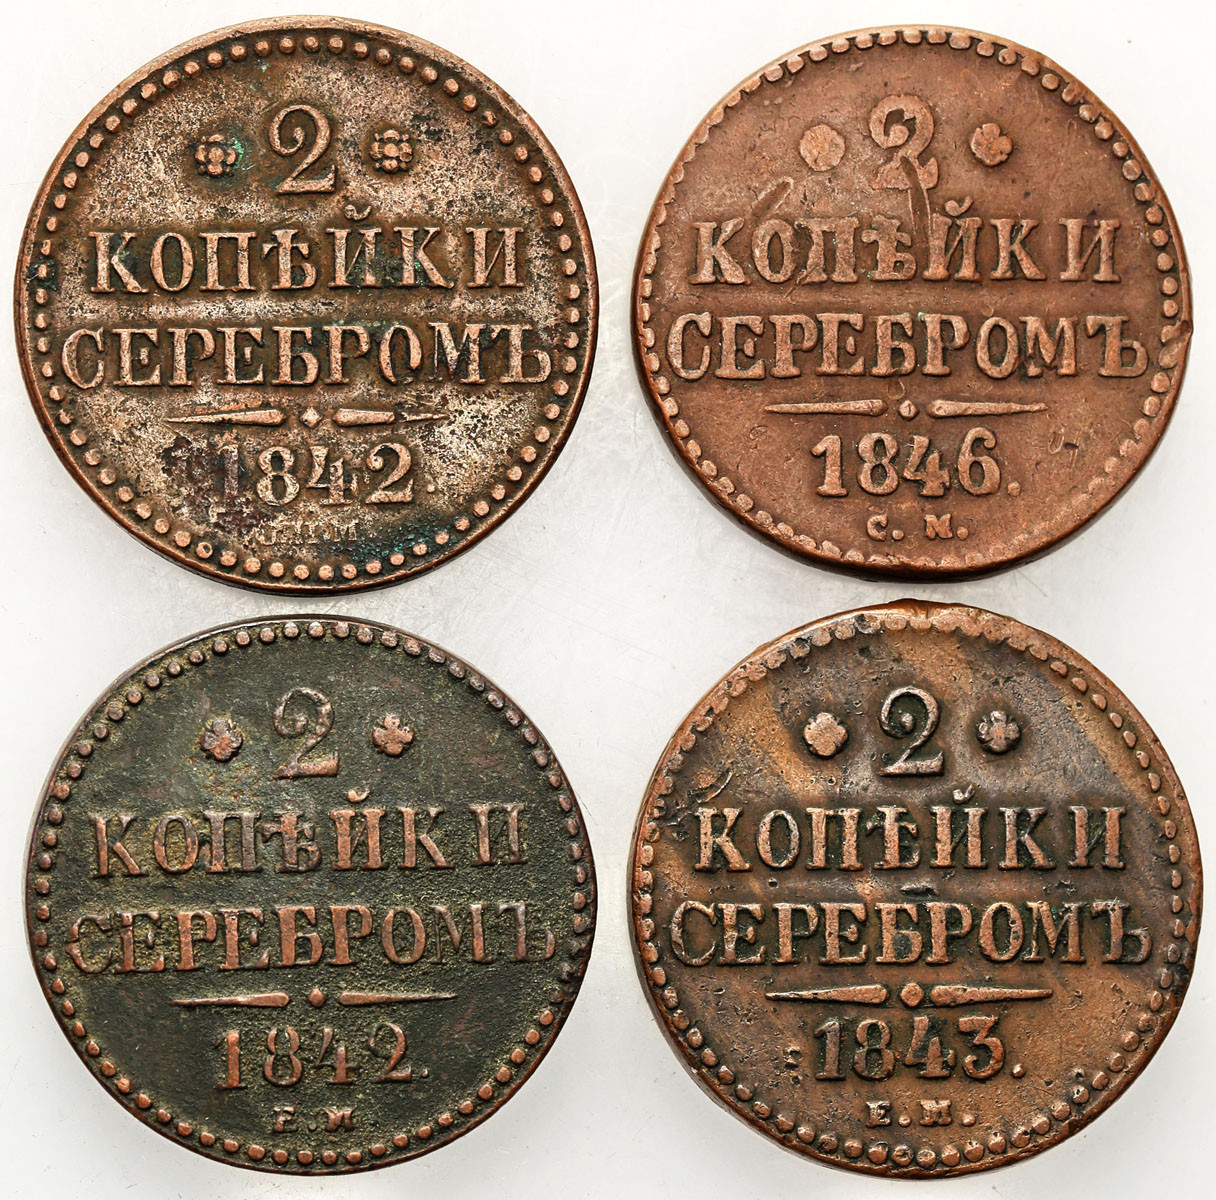 Rosja, Mikołaj I. 2 kopiejki srebrem 1842-1846, Iżorsk, Jekaterinburg